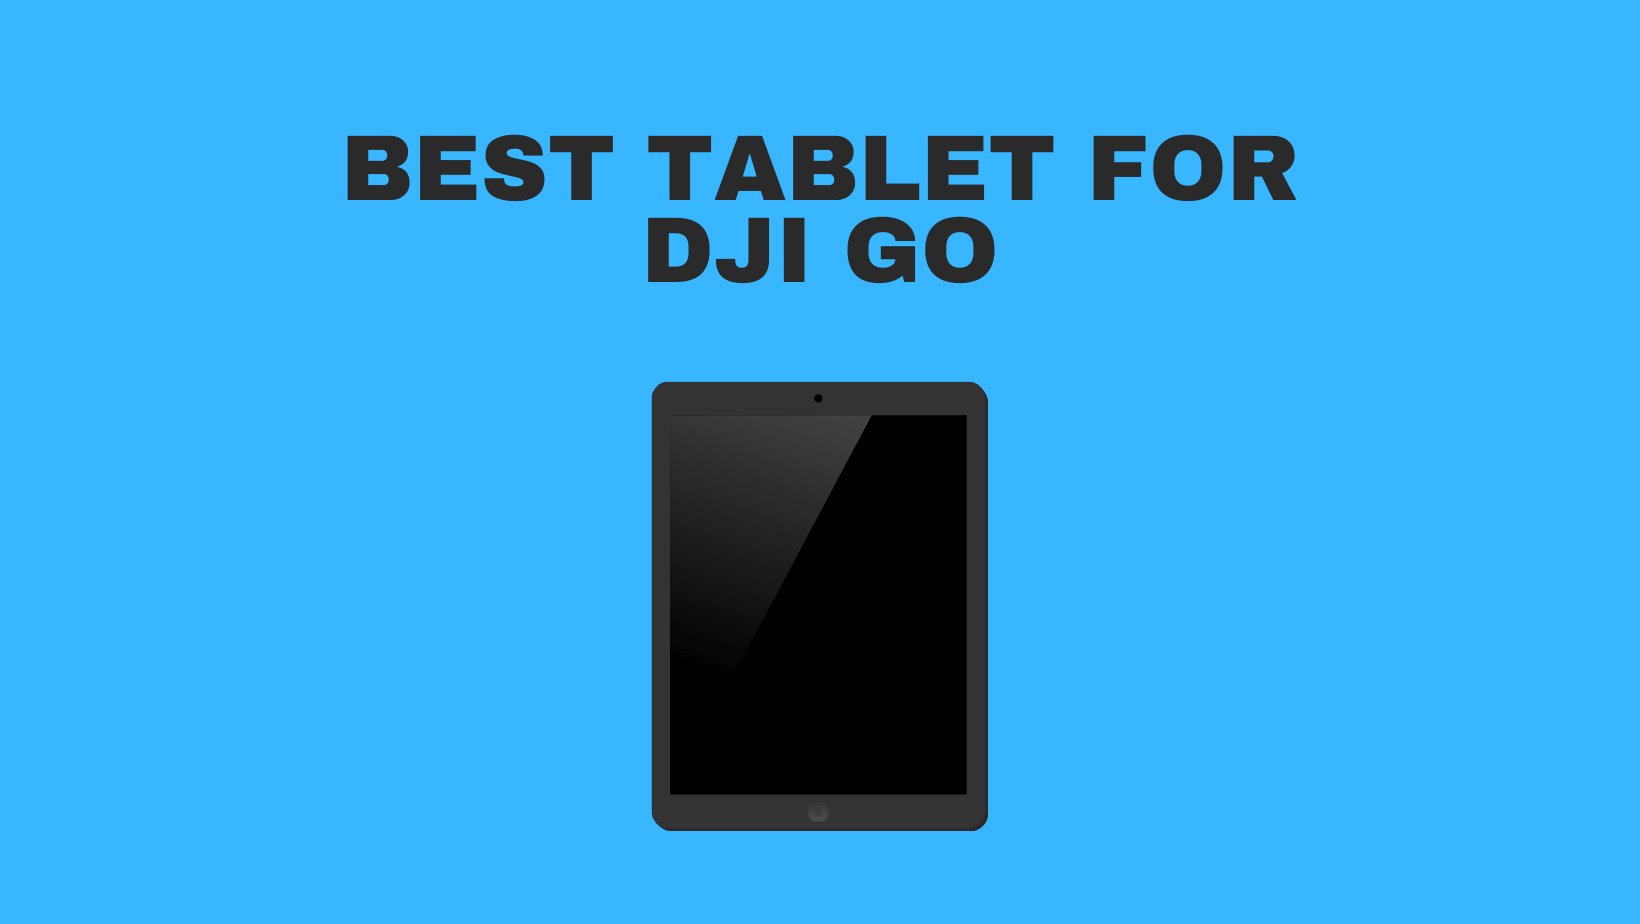 Best Tablet For DJI GO